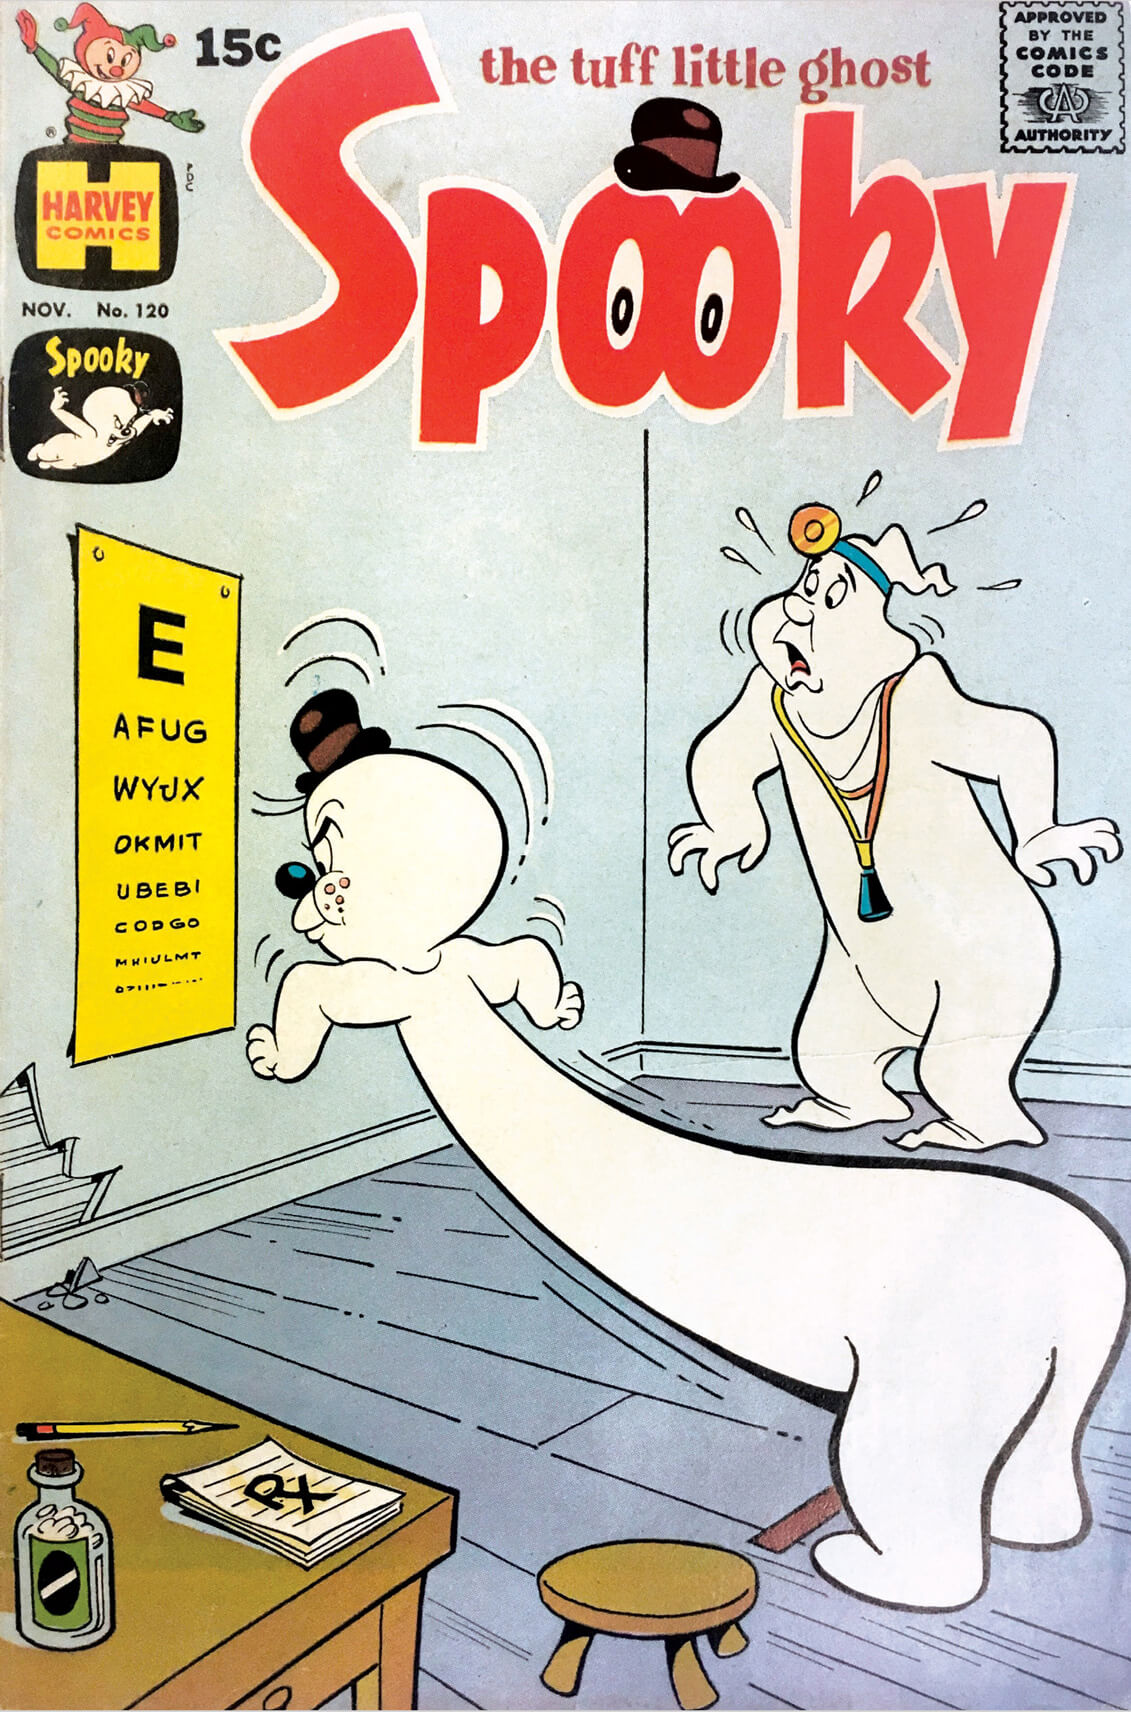 An image from the November nineteen seventy edition of Harvey Comics series 